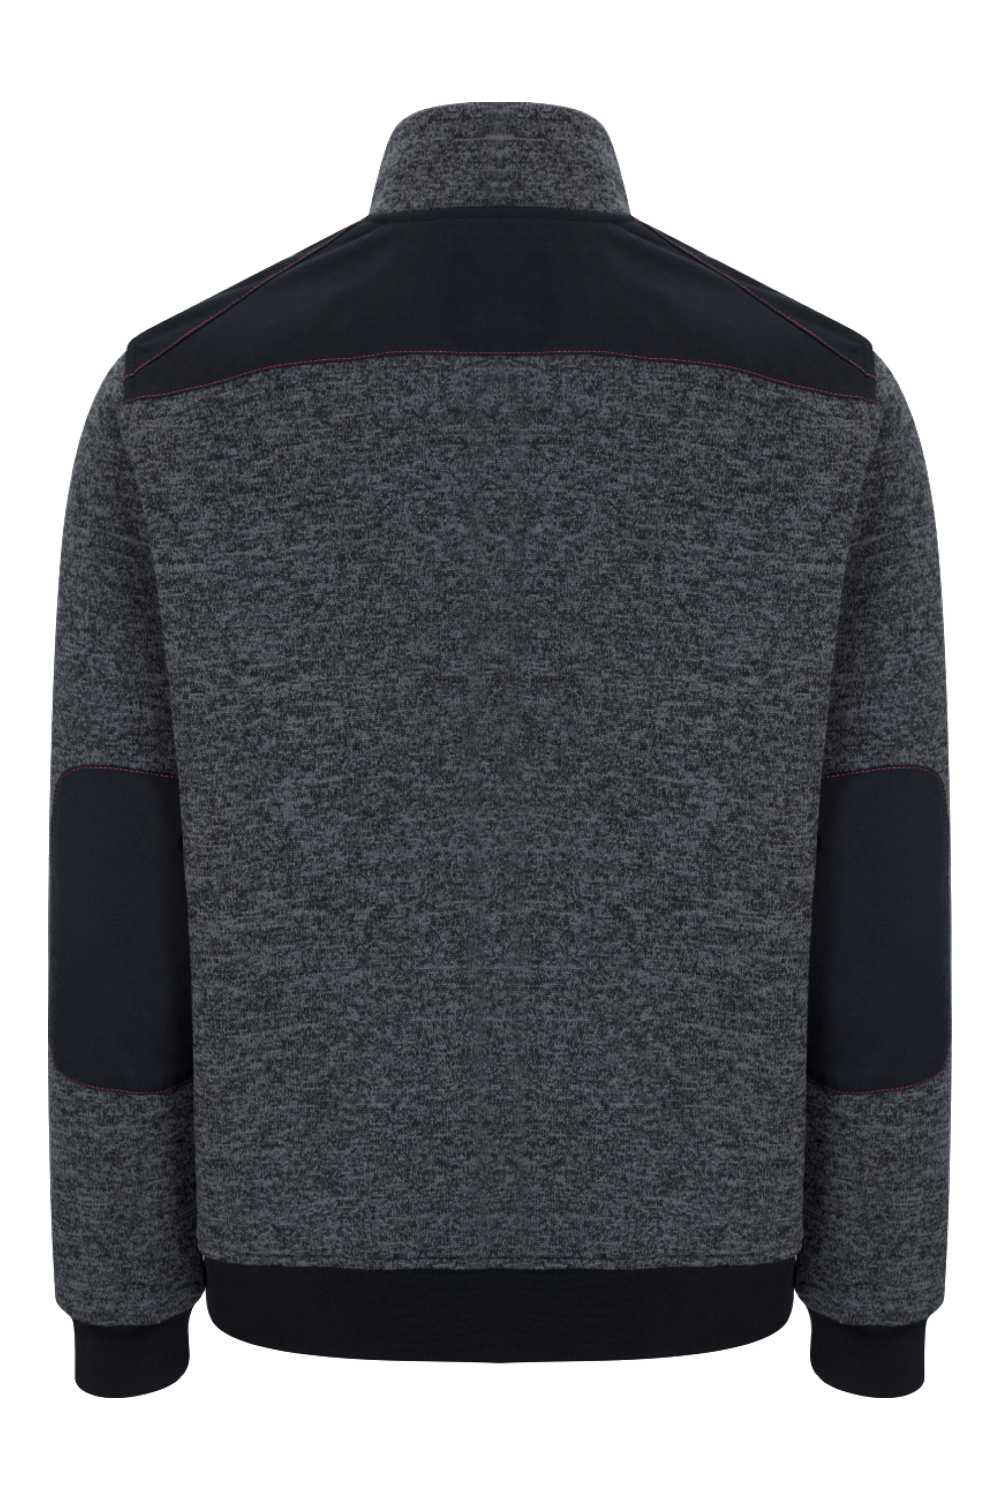 Hoggs of Fife Granite Sweatshirt in charcoal